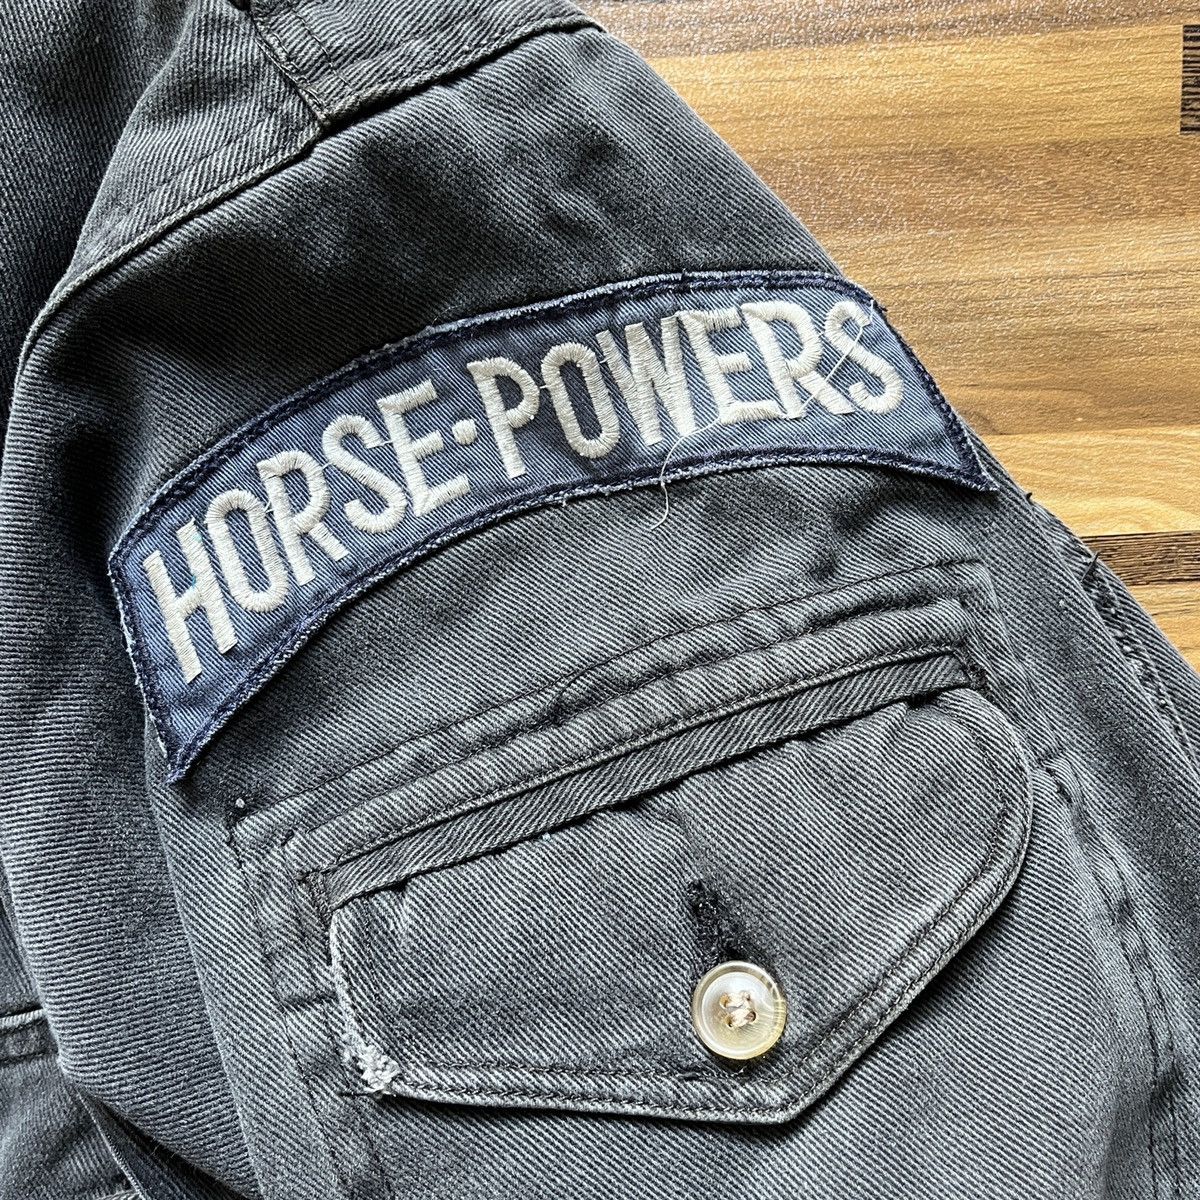 24 Horse Powers Bomber Jacket Vintage 80s - 7